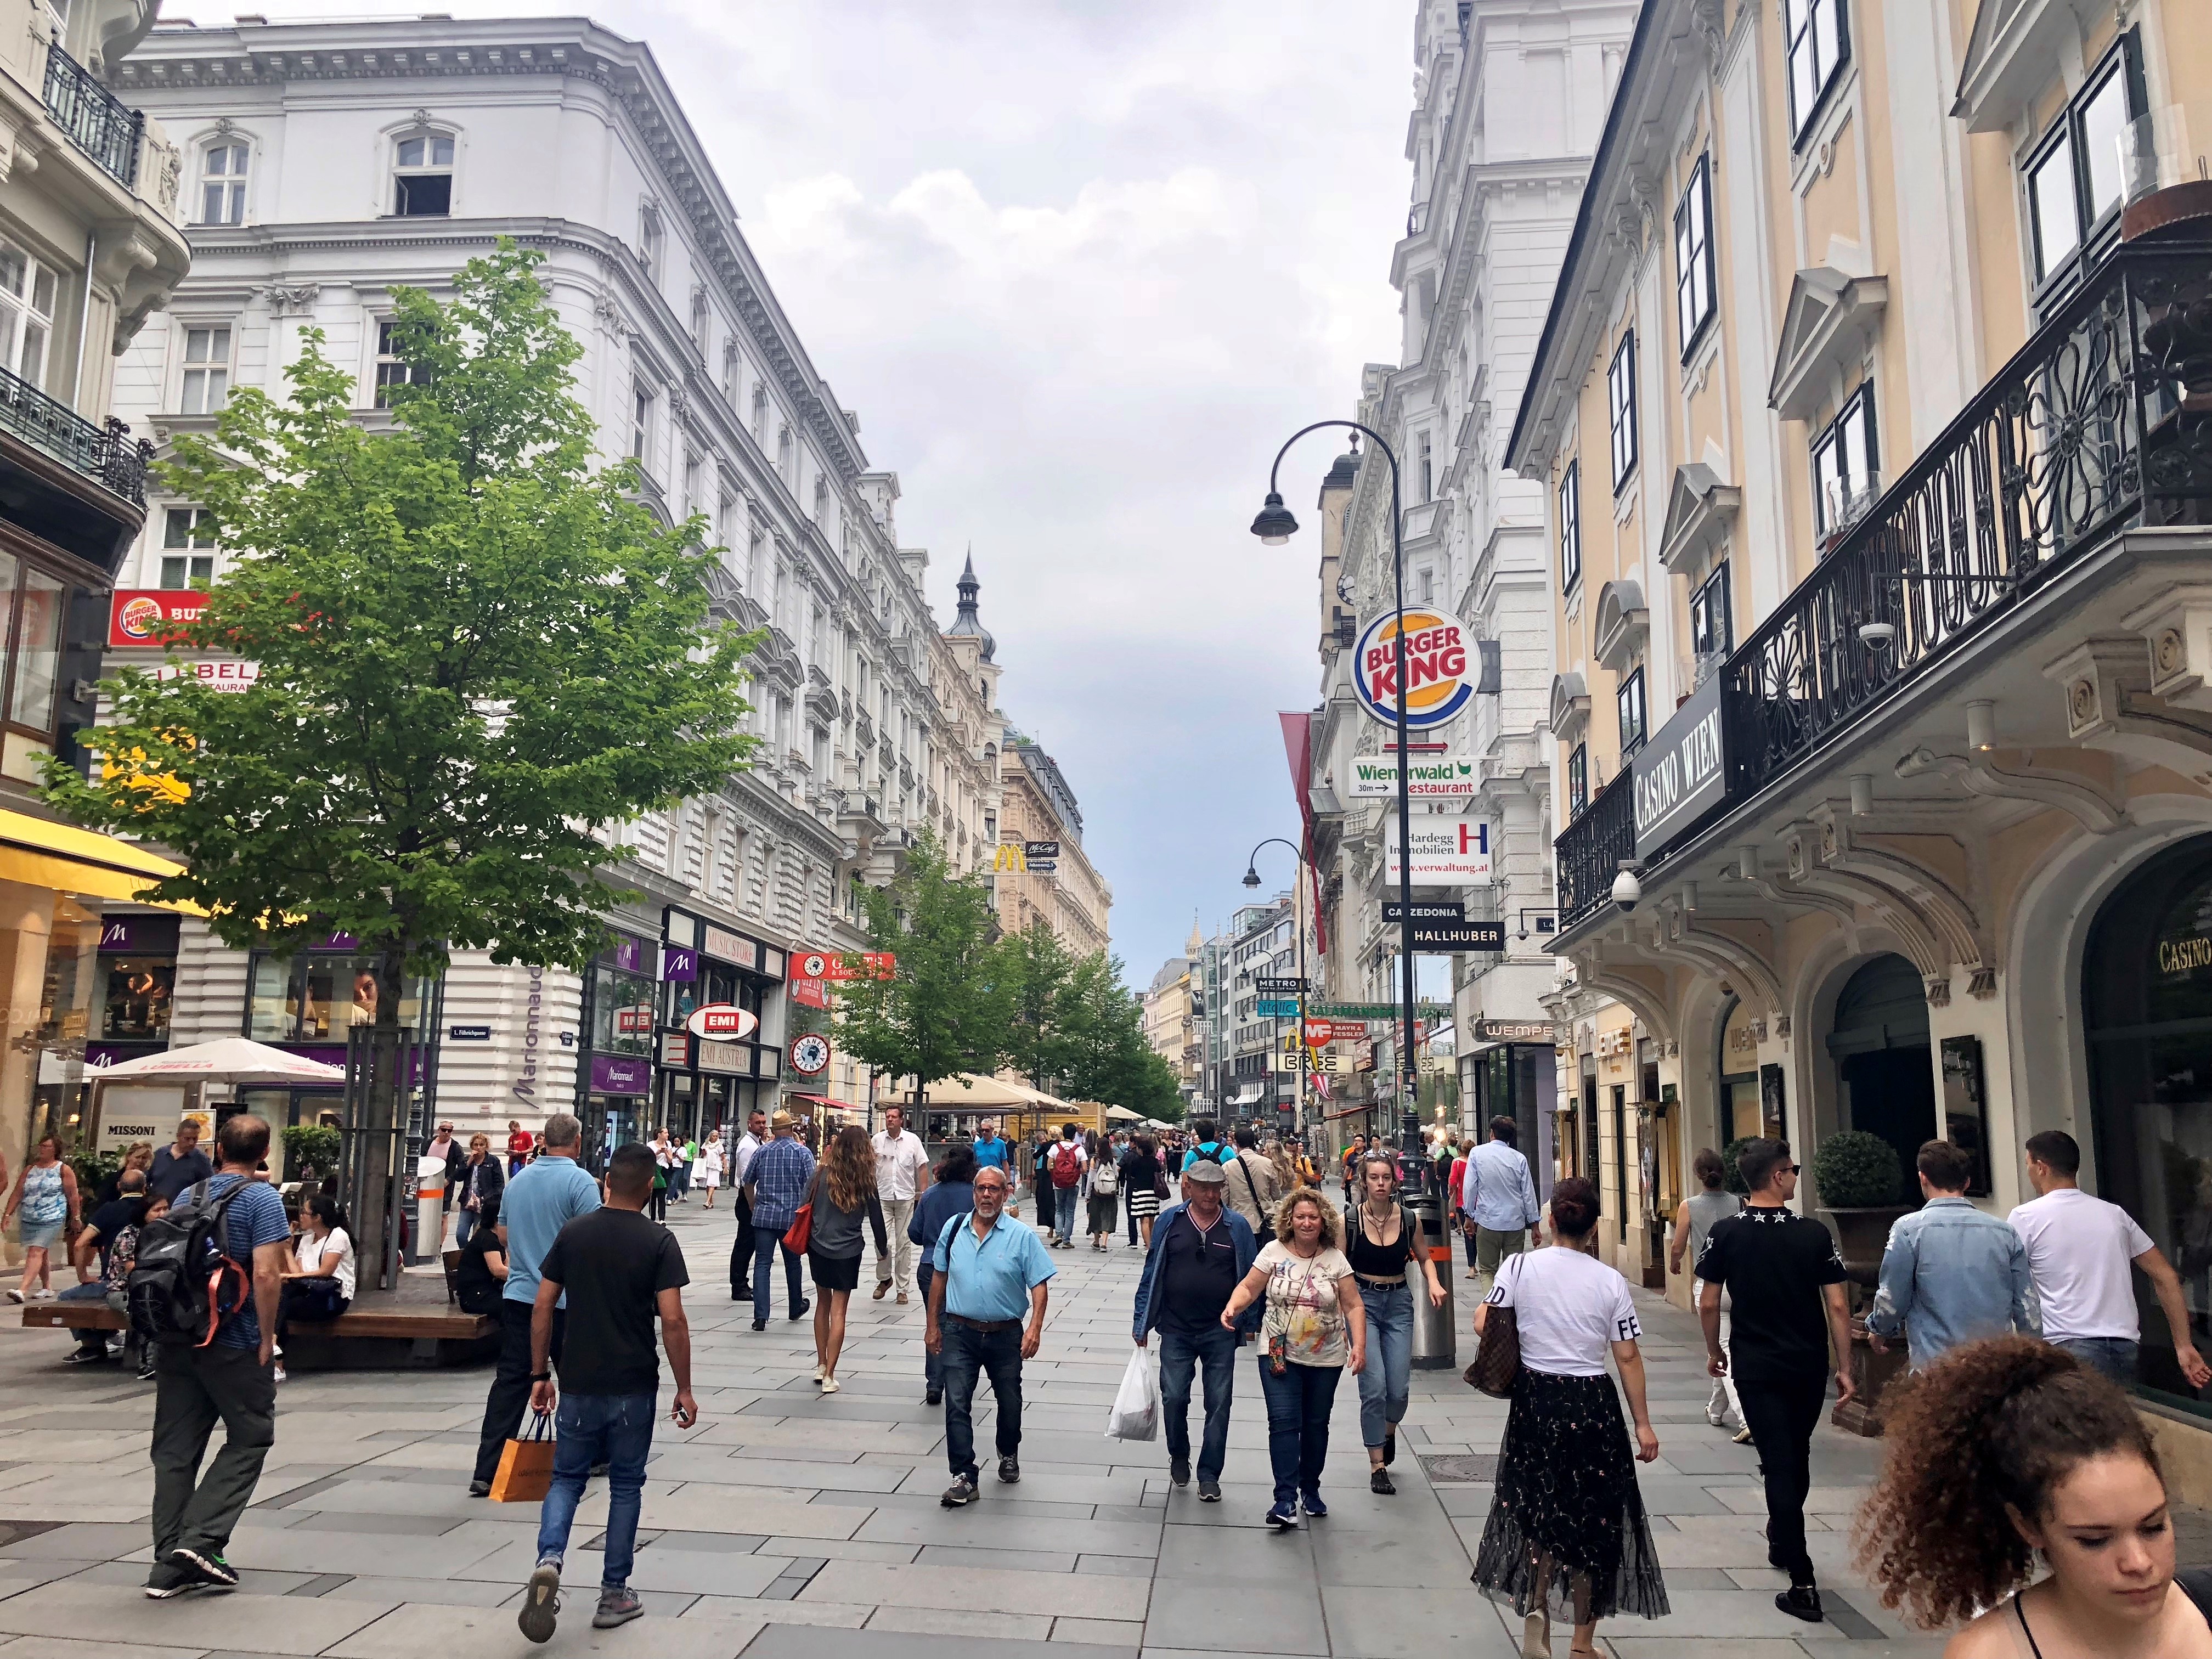 Stephansplatz, main street with shops